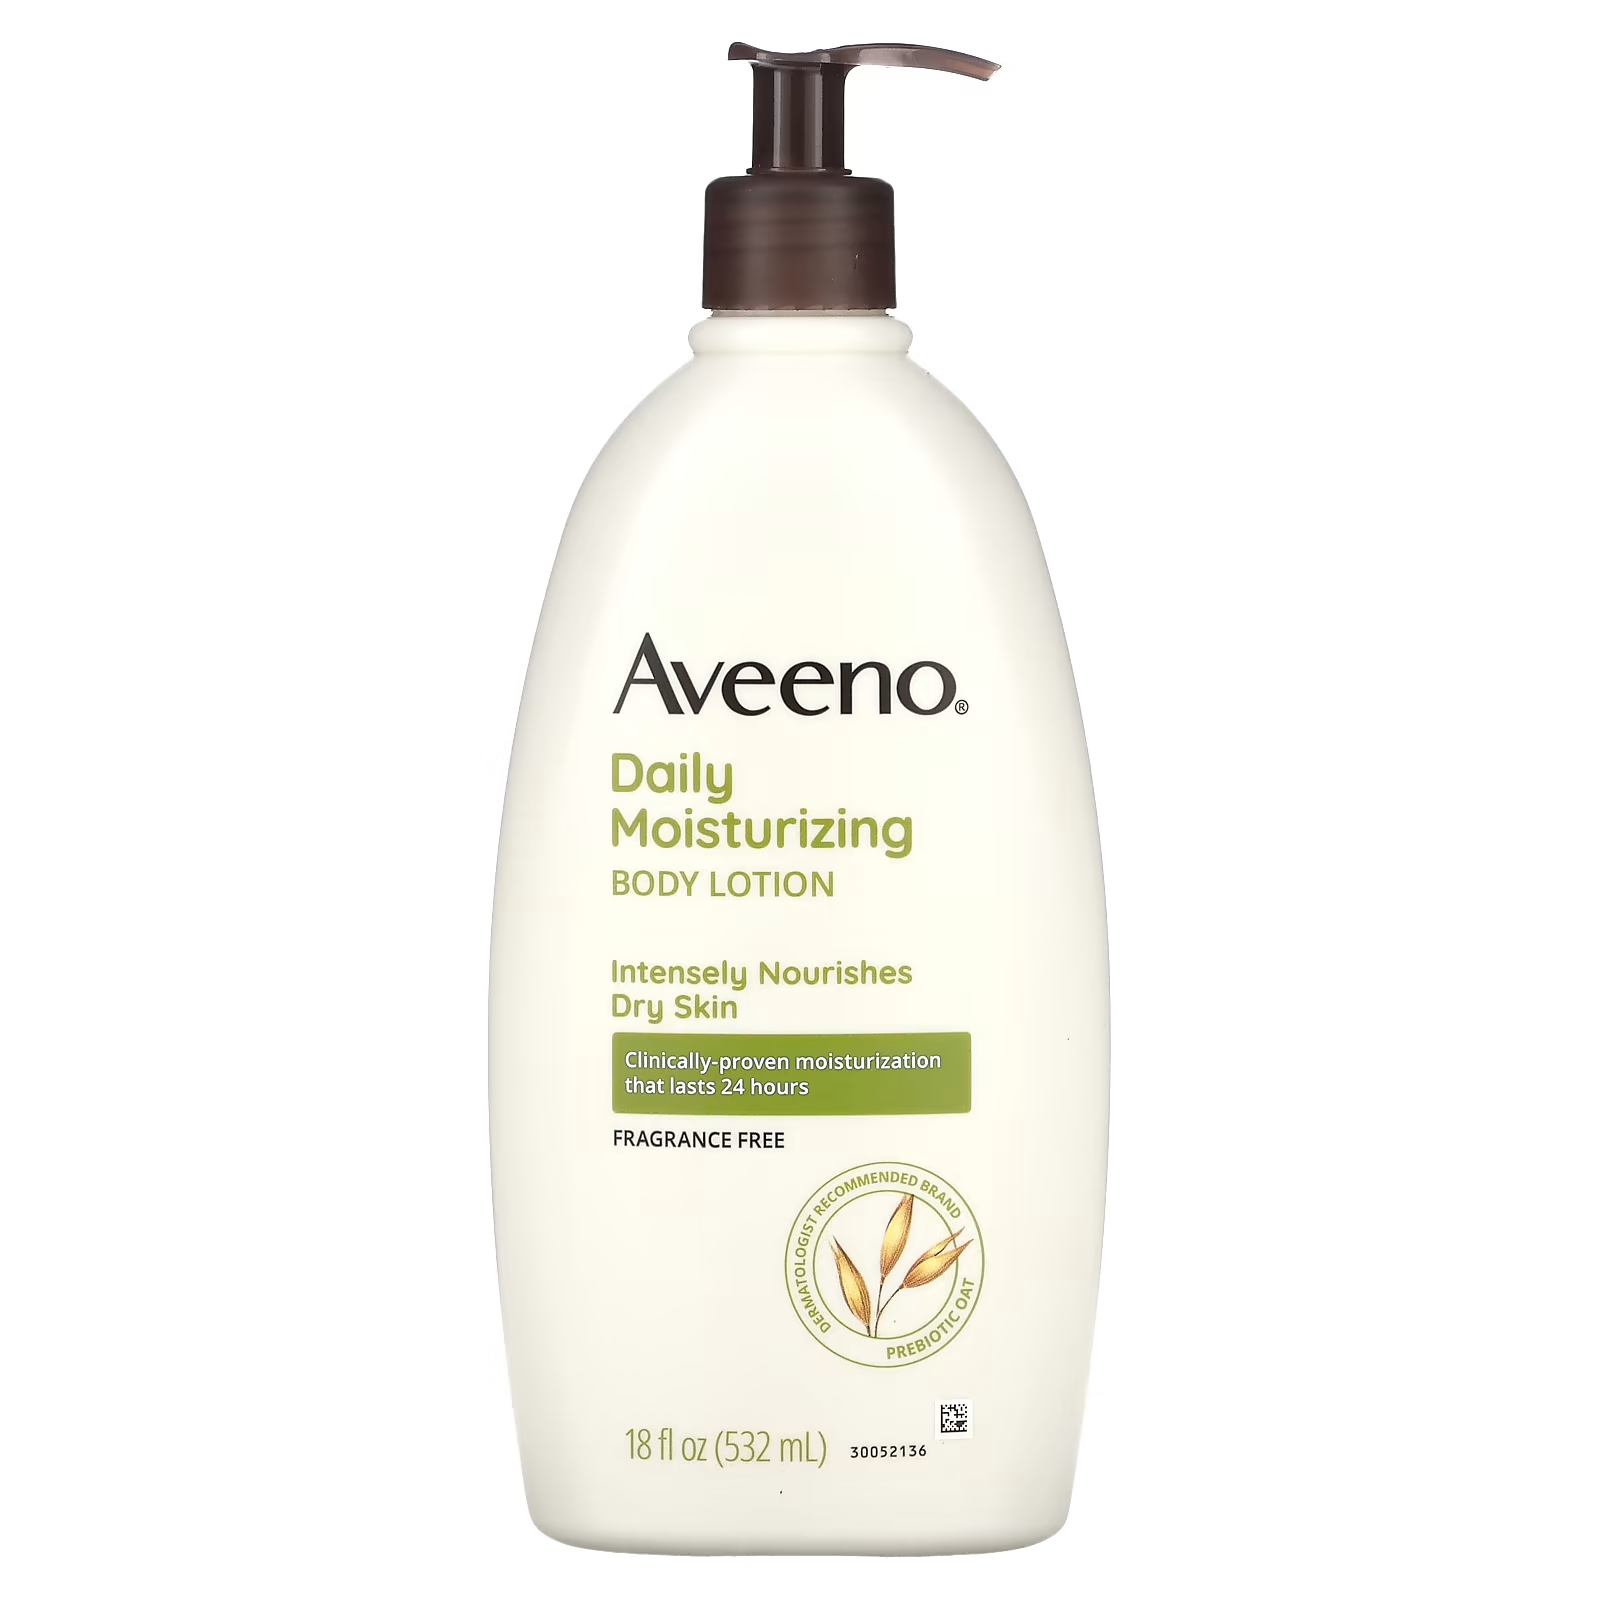 Aveeno Daily Увлажняющий лосьон для тела без запаха, 18 жидких унций (532 мл) aveeno лосьон для увлажнения кожи без запаха 532 мл 18 жидк унций